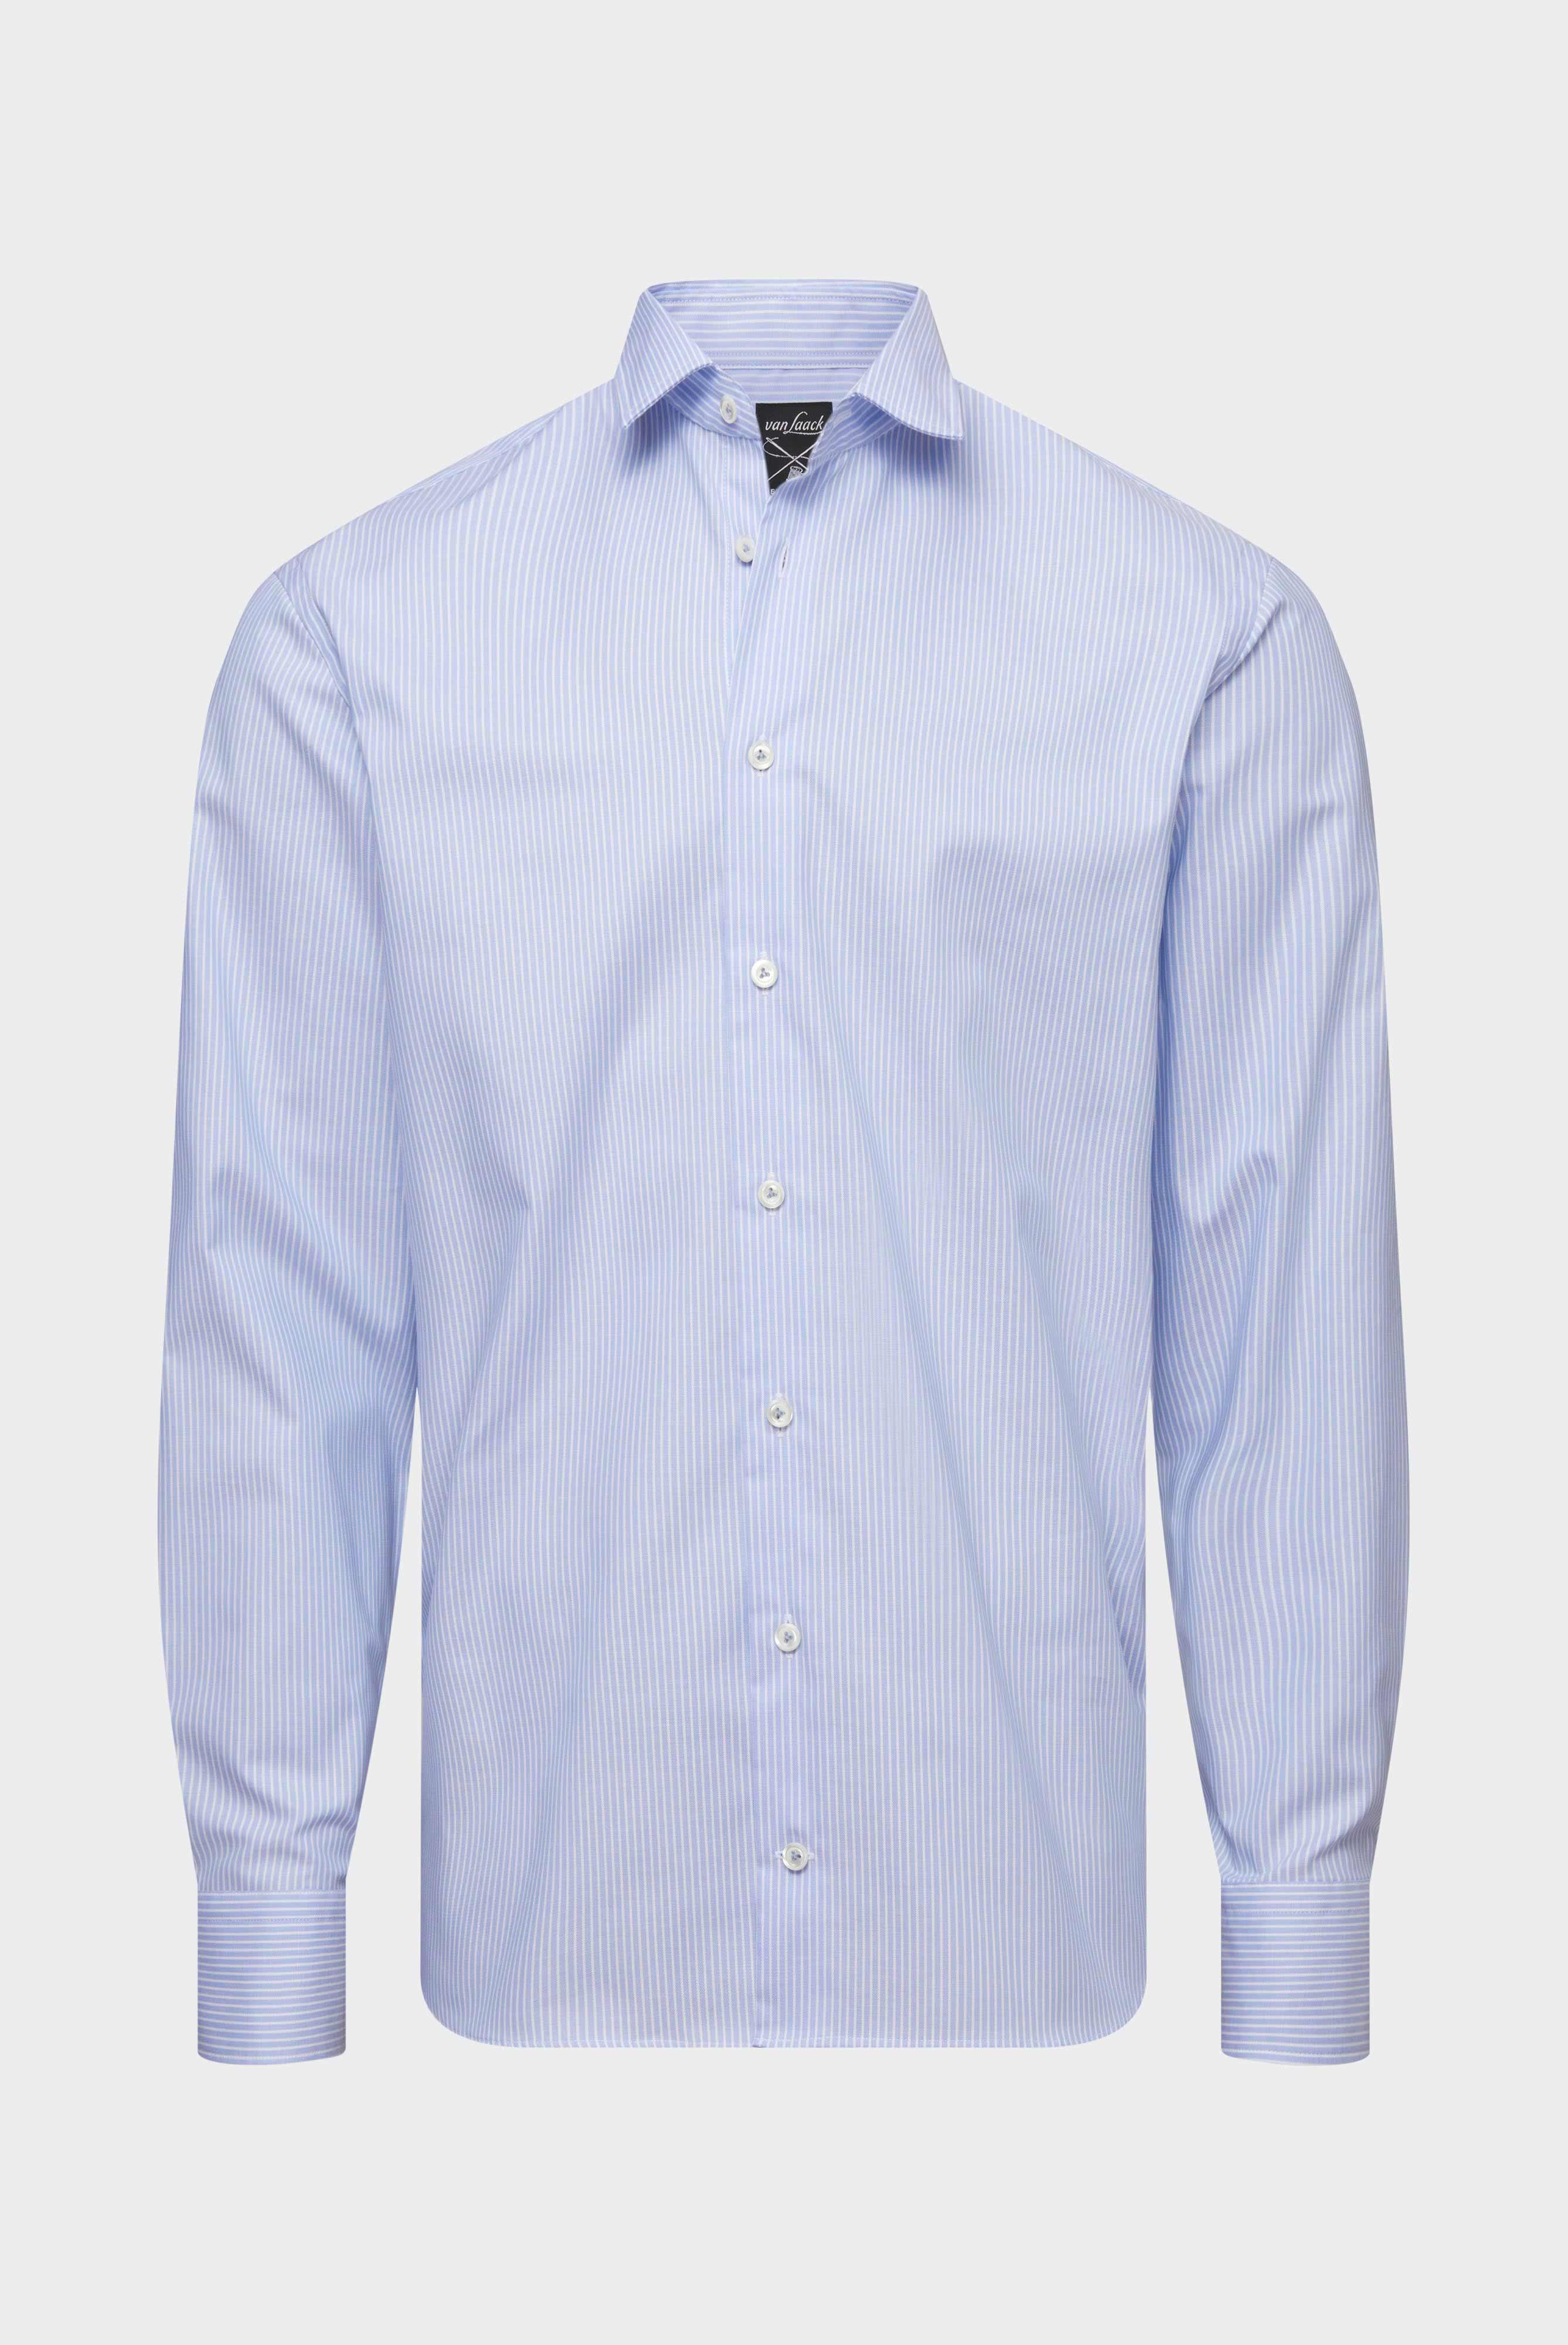 Easy Iron Shirts+Wrinkle-Free Shirt made of Organic Cotton+20.3281.NV.166007.730.39